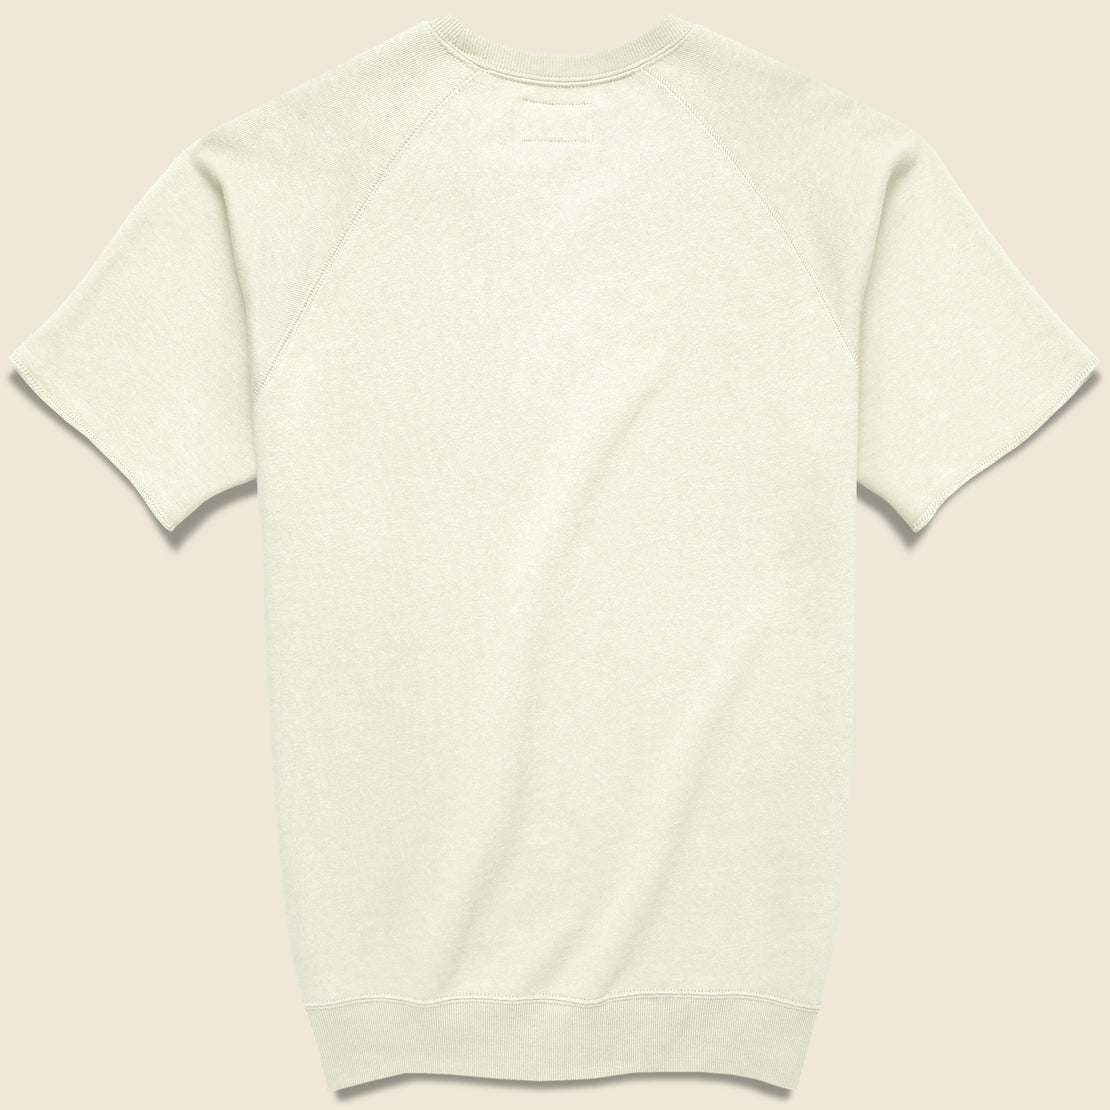 Cut-Off Sweatshirt - Off White - BEAMS+ - STAG Provisions - Tops - Fleece / Sweatshirt